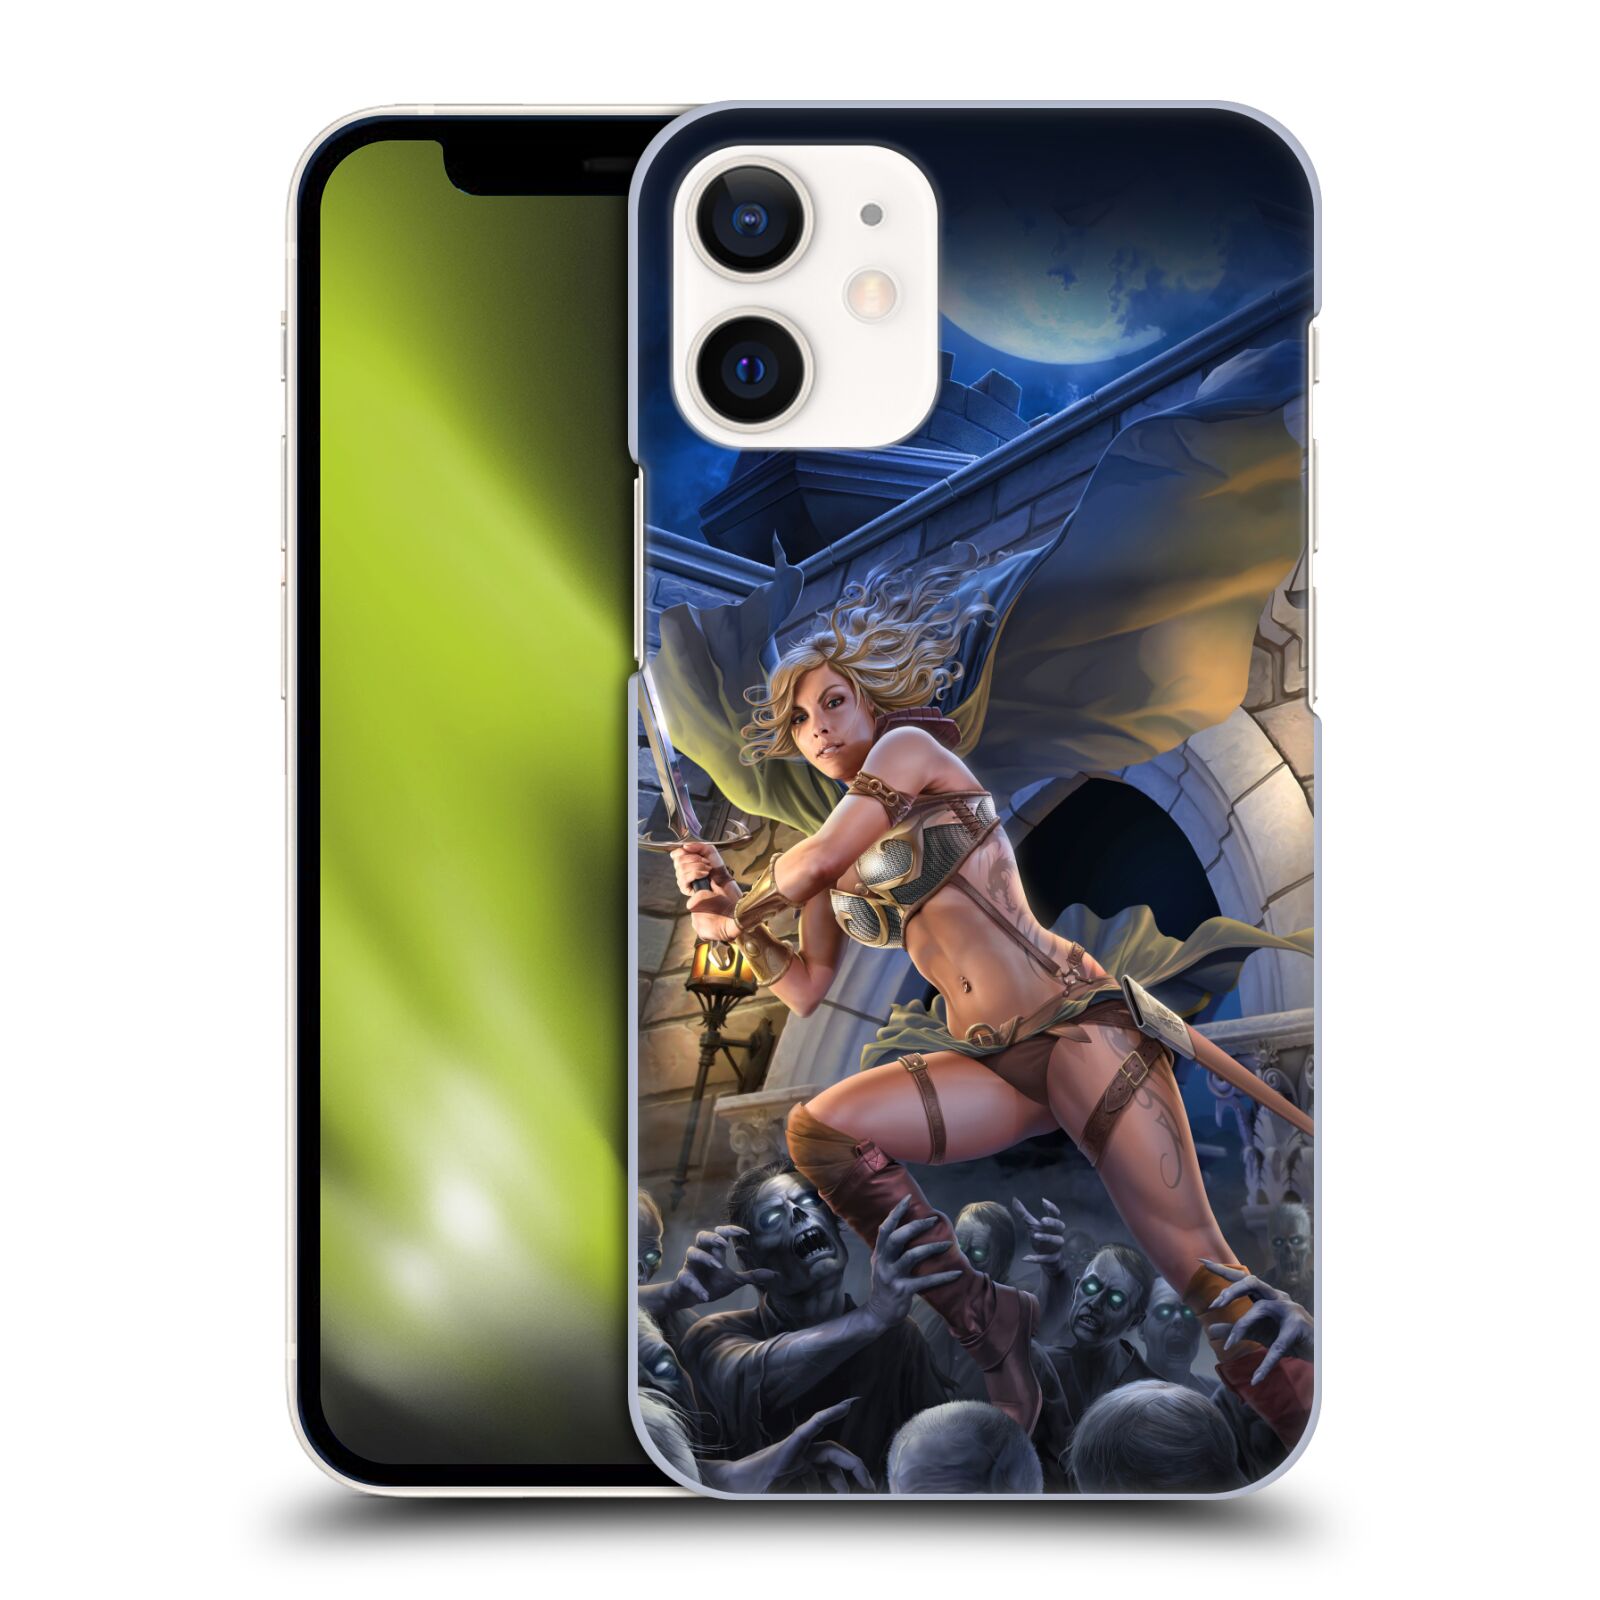 Pouzdro na mobil Apple Iphone 12 MINI - HEAD CASE - Fantasy kresby Tom Wood - Princezna bojovnice a zombies